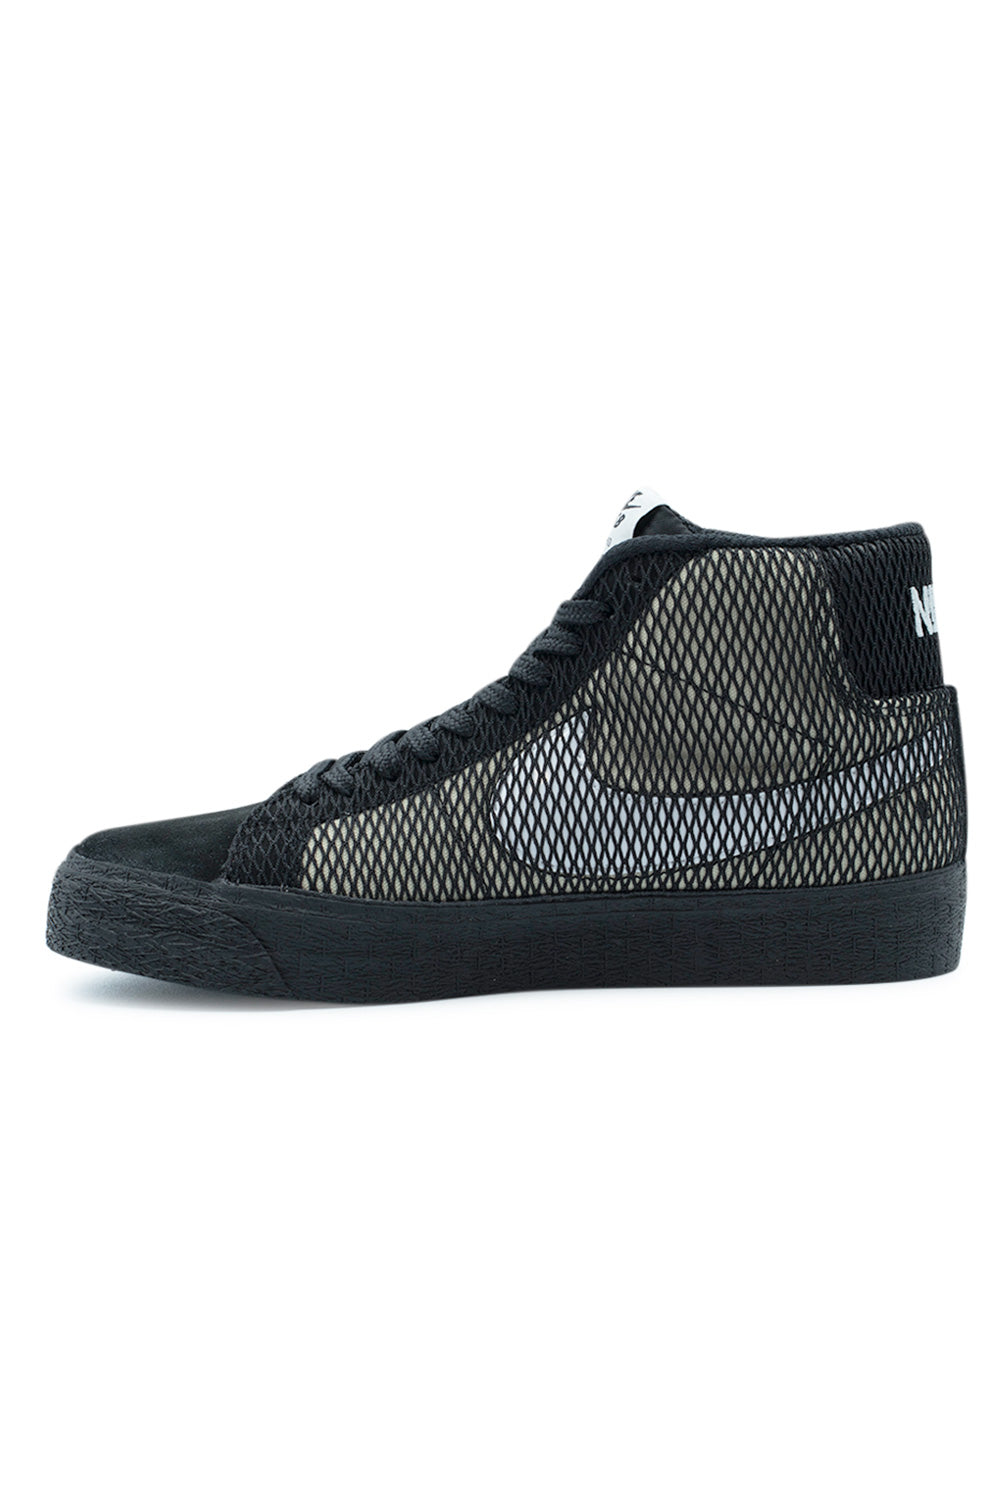 Nike SB Zoom Blazer Mid PRM Shoe White / Black / White / Black - BONKERS